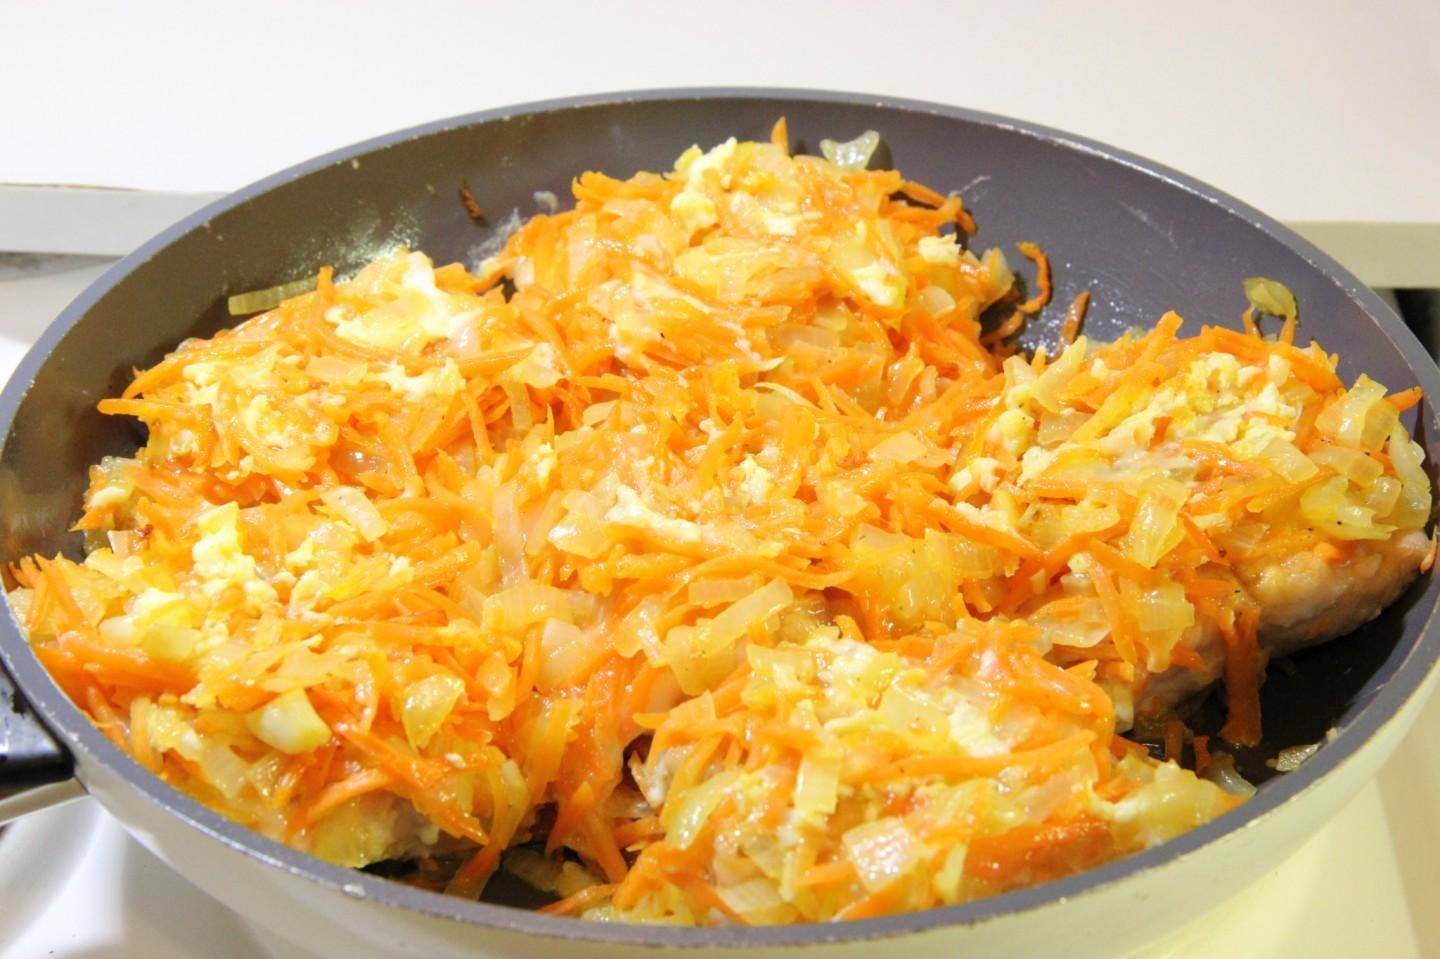 Тушеная картошка в мультиварке - блюдо на все случаи жизни: рецепт с фото